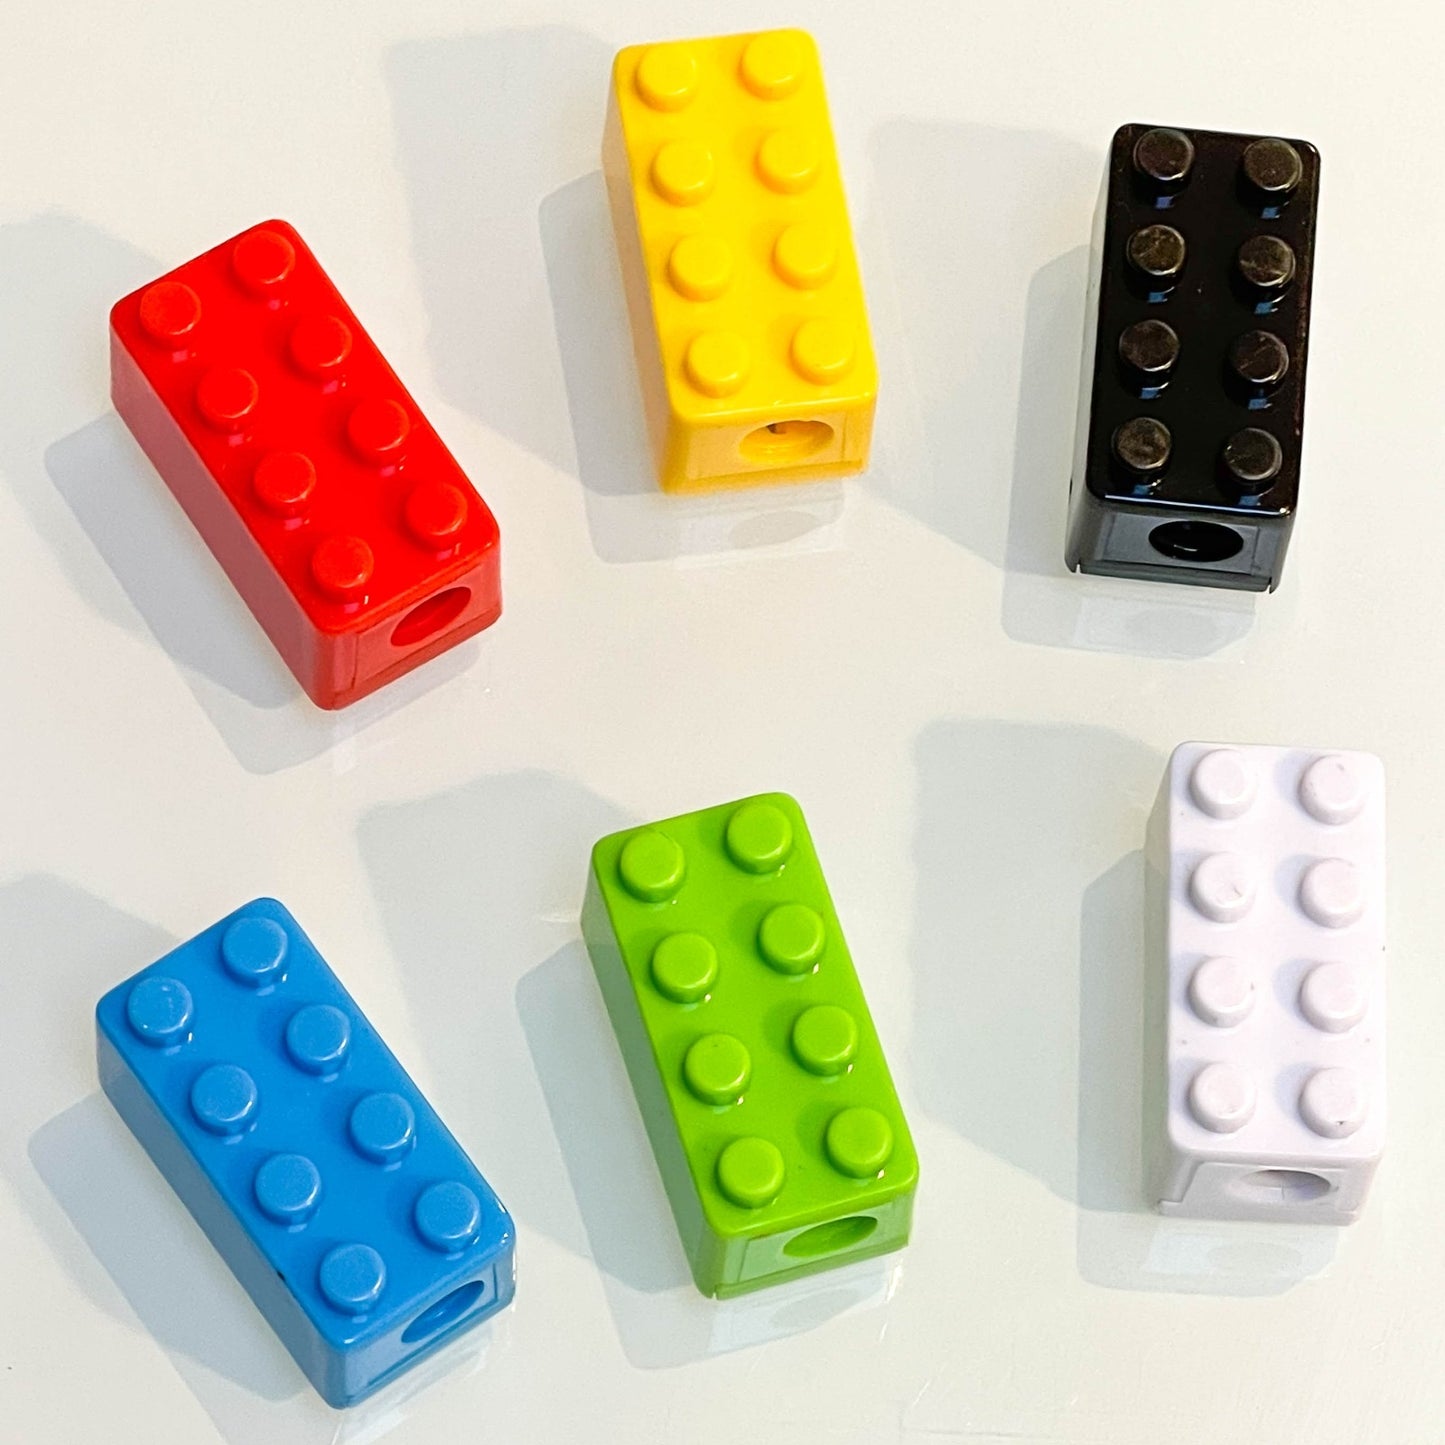 Novelty Lego brick sharpener